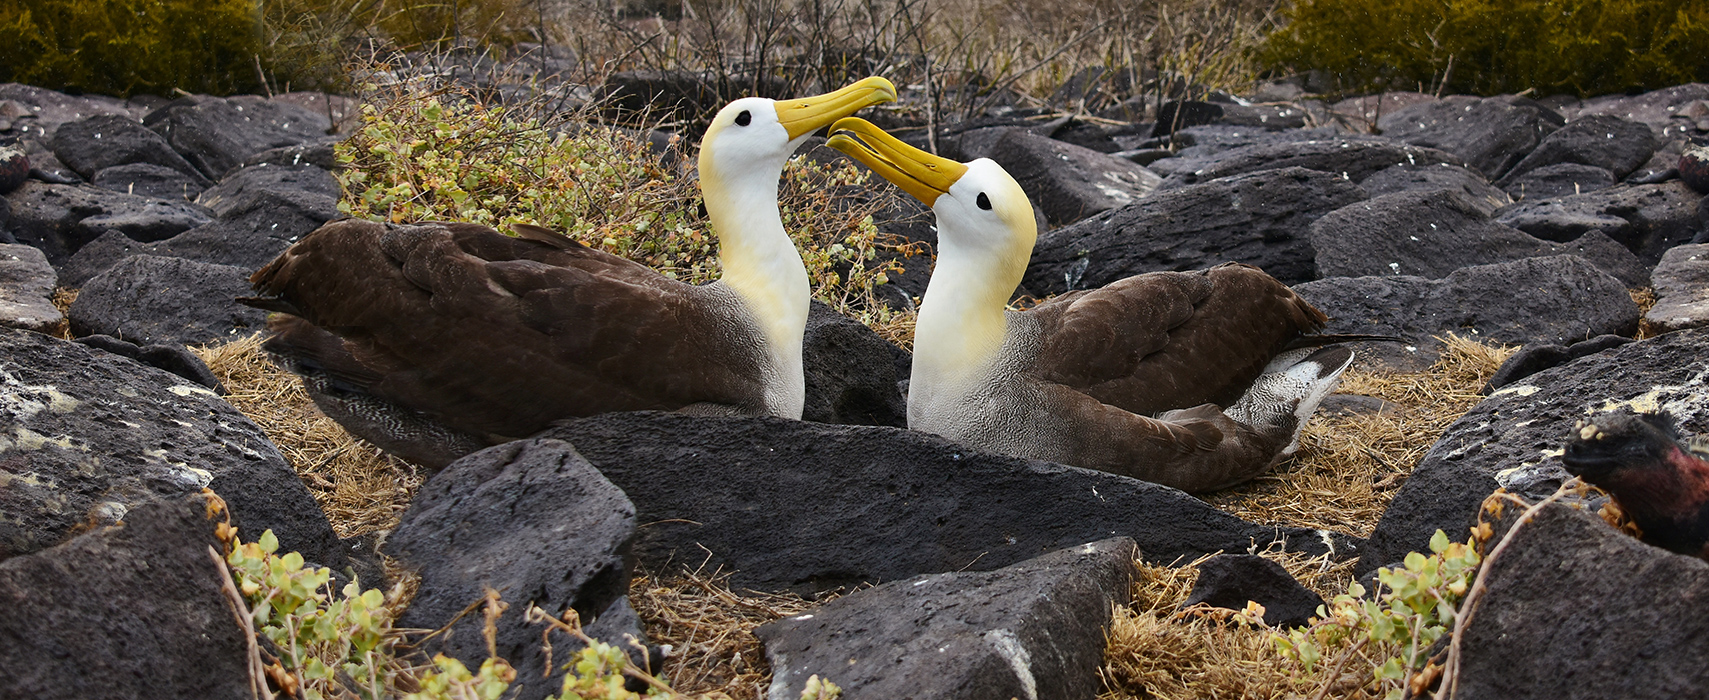 Galapagos islands albatross